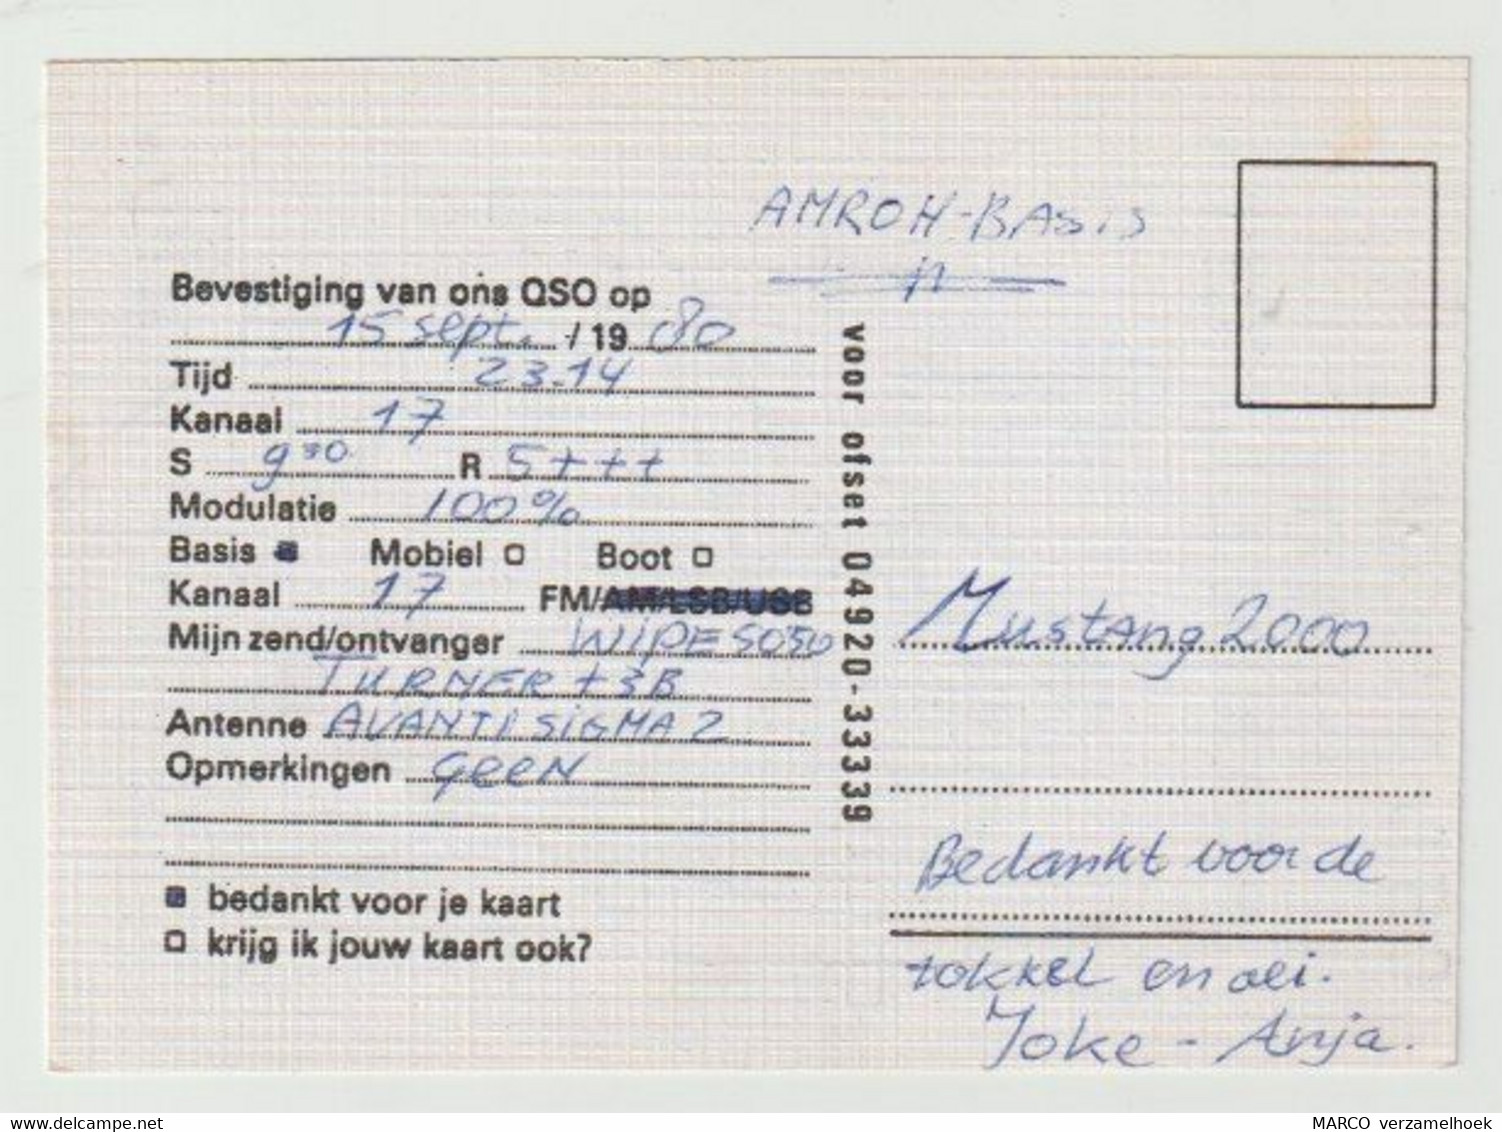 QSL Card 27MC Lady Candlellight Mierlo-hout Helmond (NL) - CB